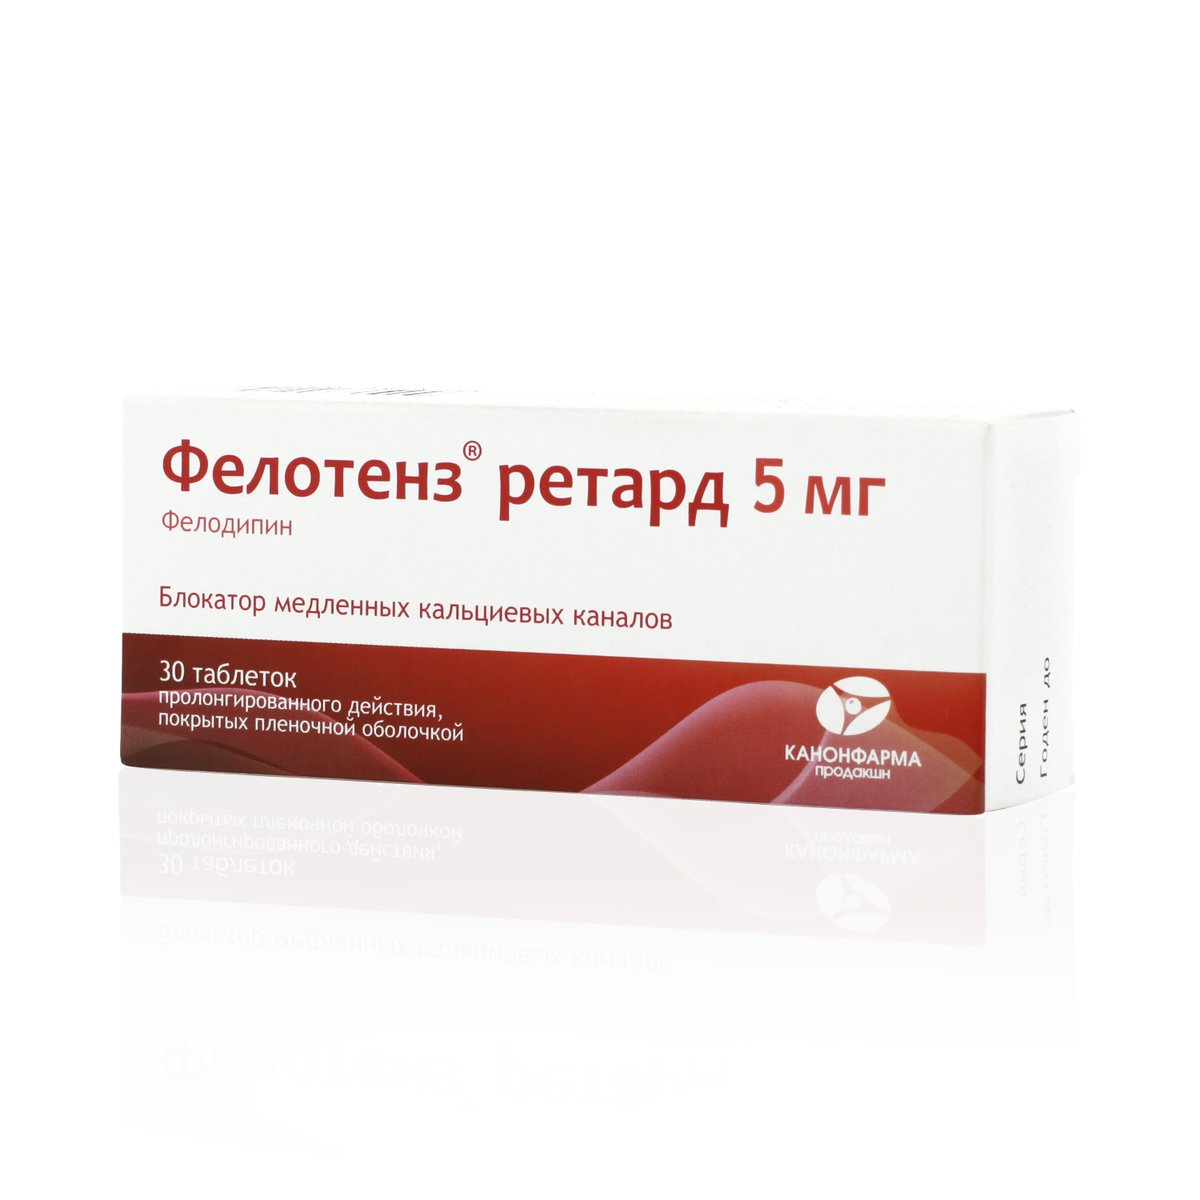 Фелотенз ретард (таблетки, 30 шт, 5 мг) - цена,  онлайн  .